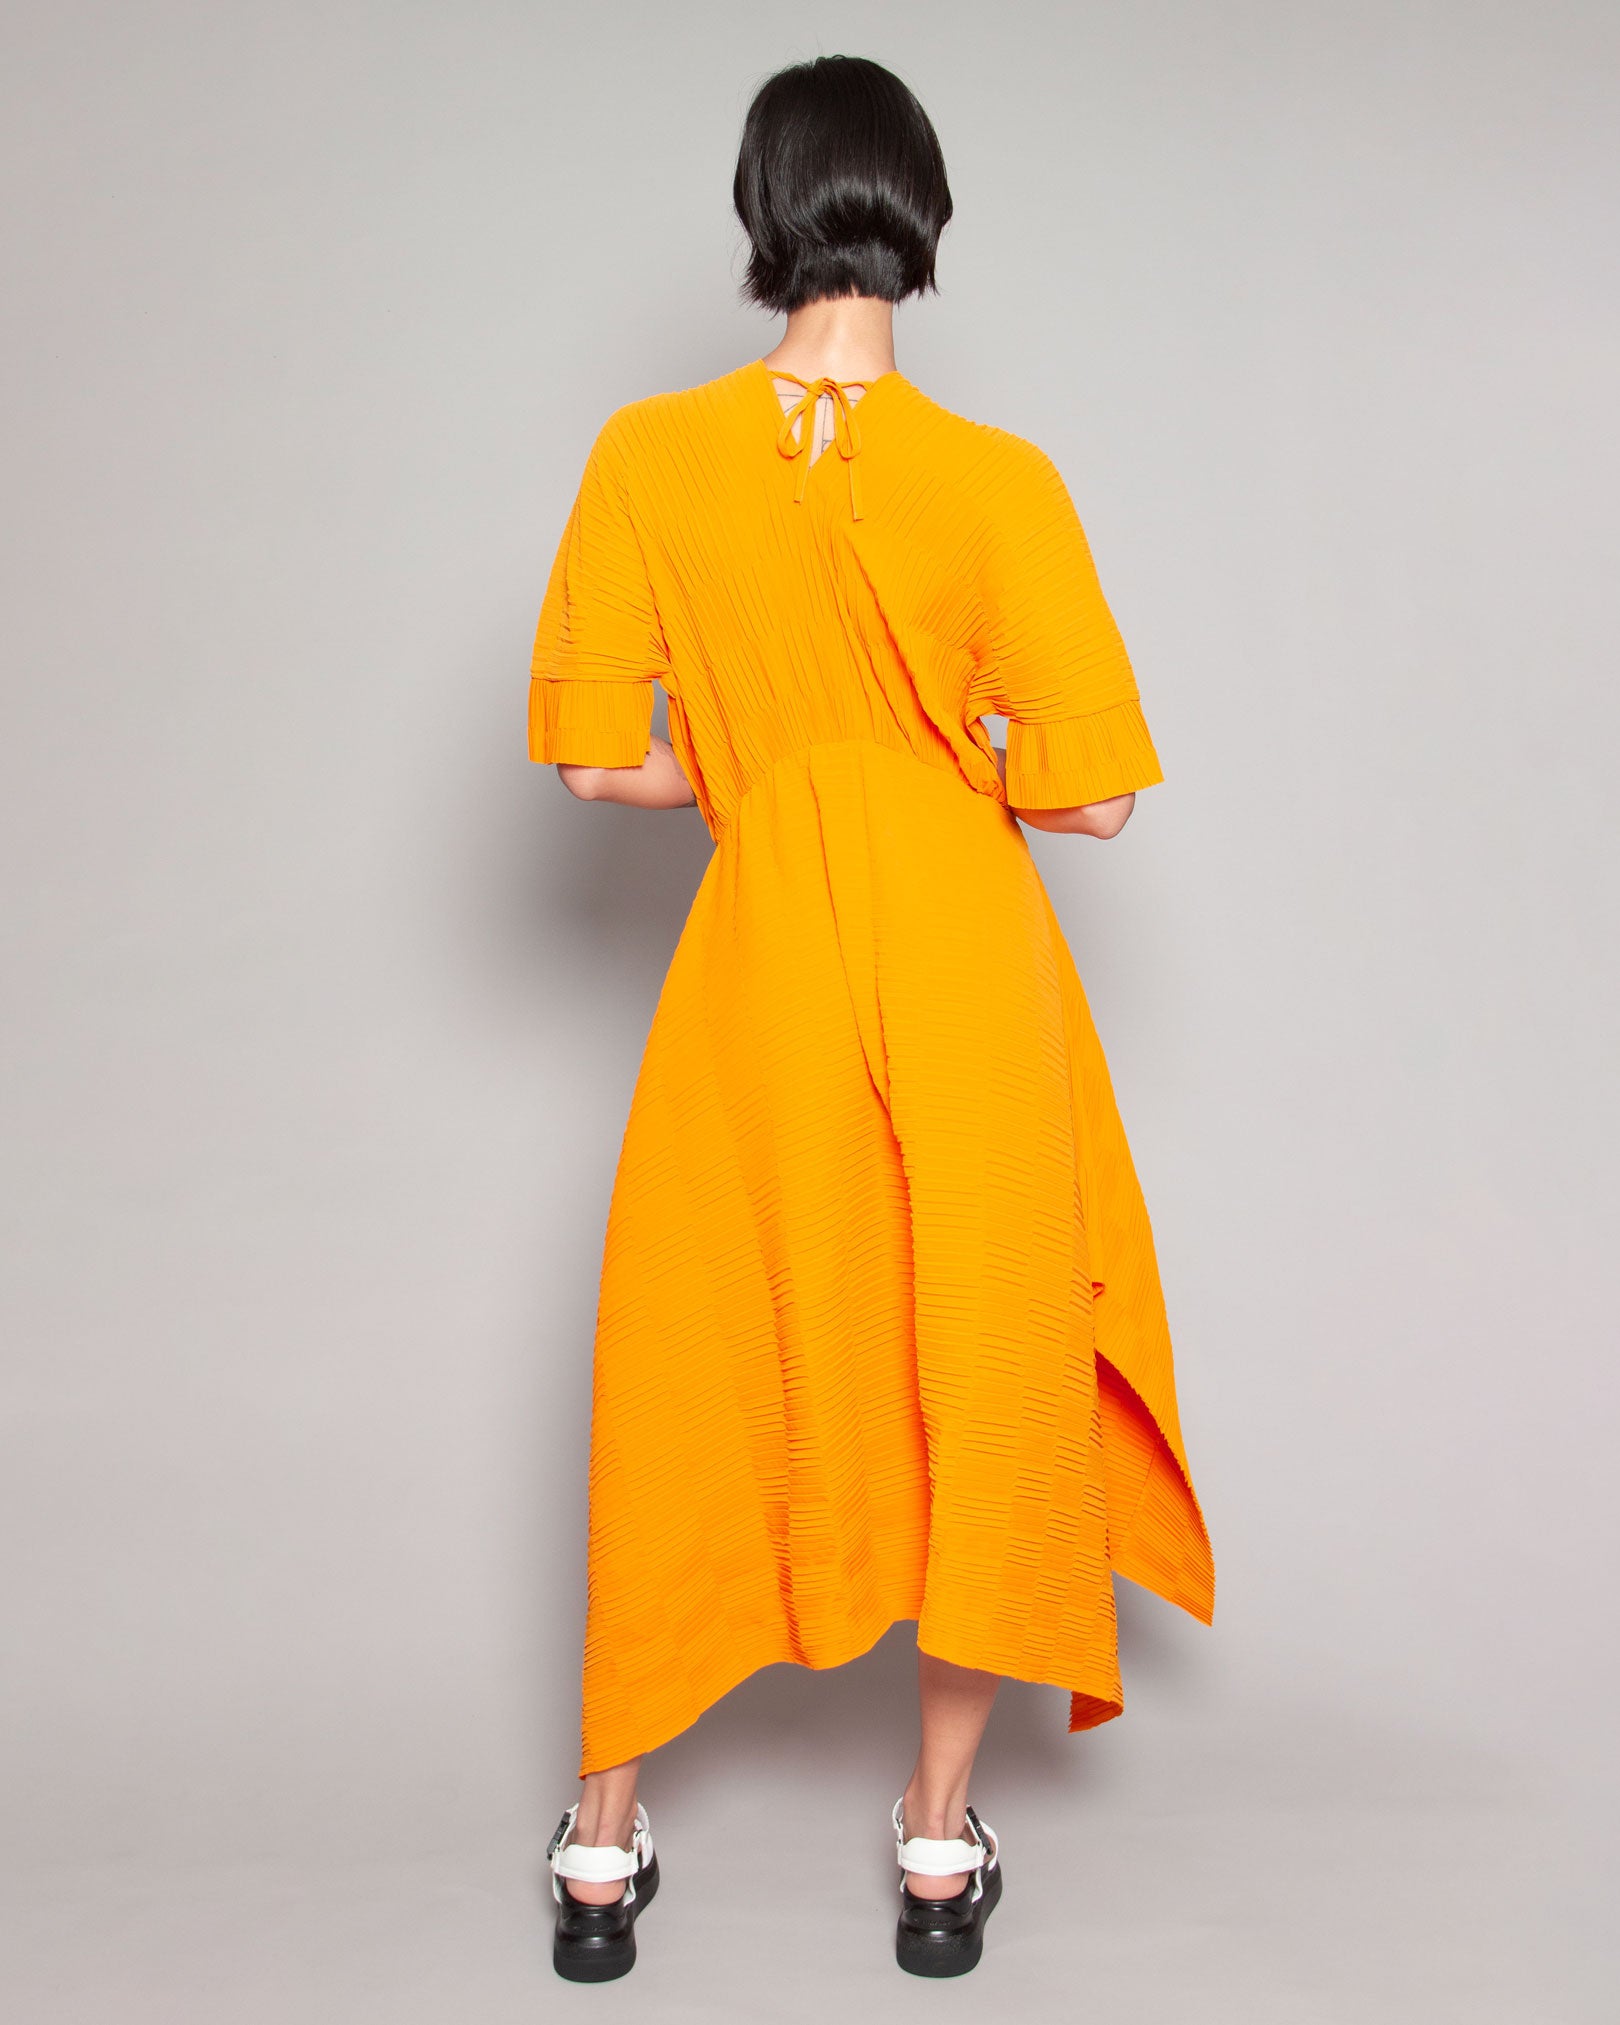 HENRIK VIBSKOV Cami Plisse Dress in Dark Cheddar available at Lahn.shop